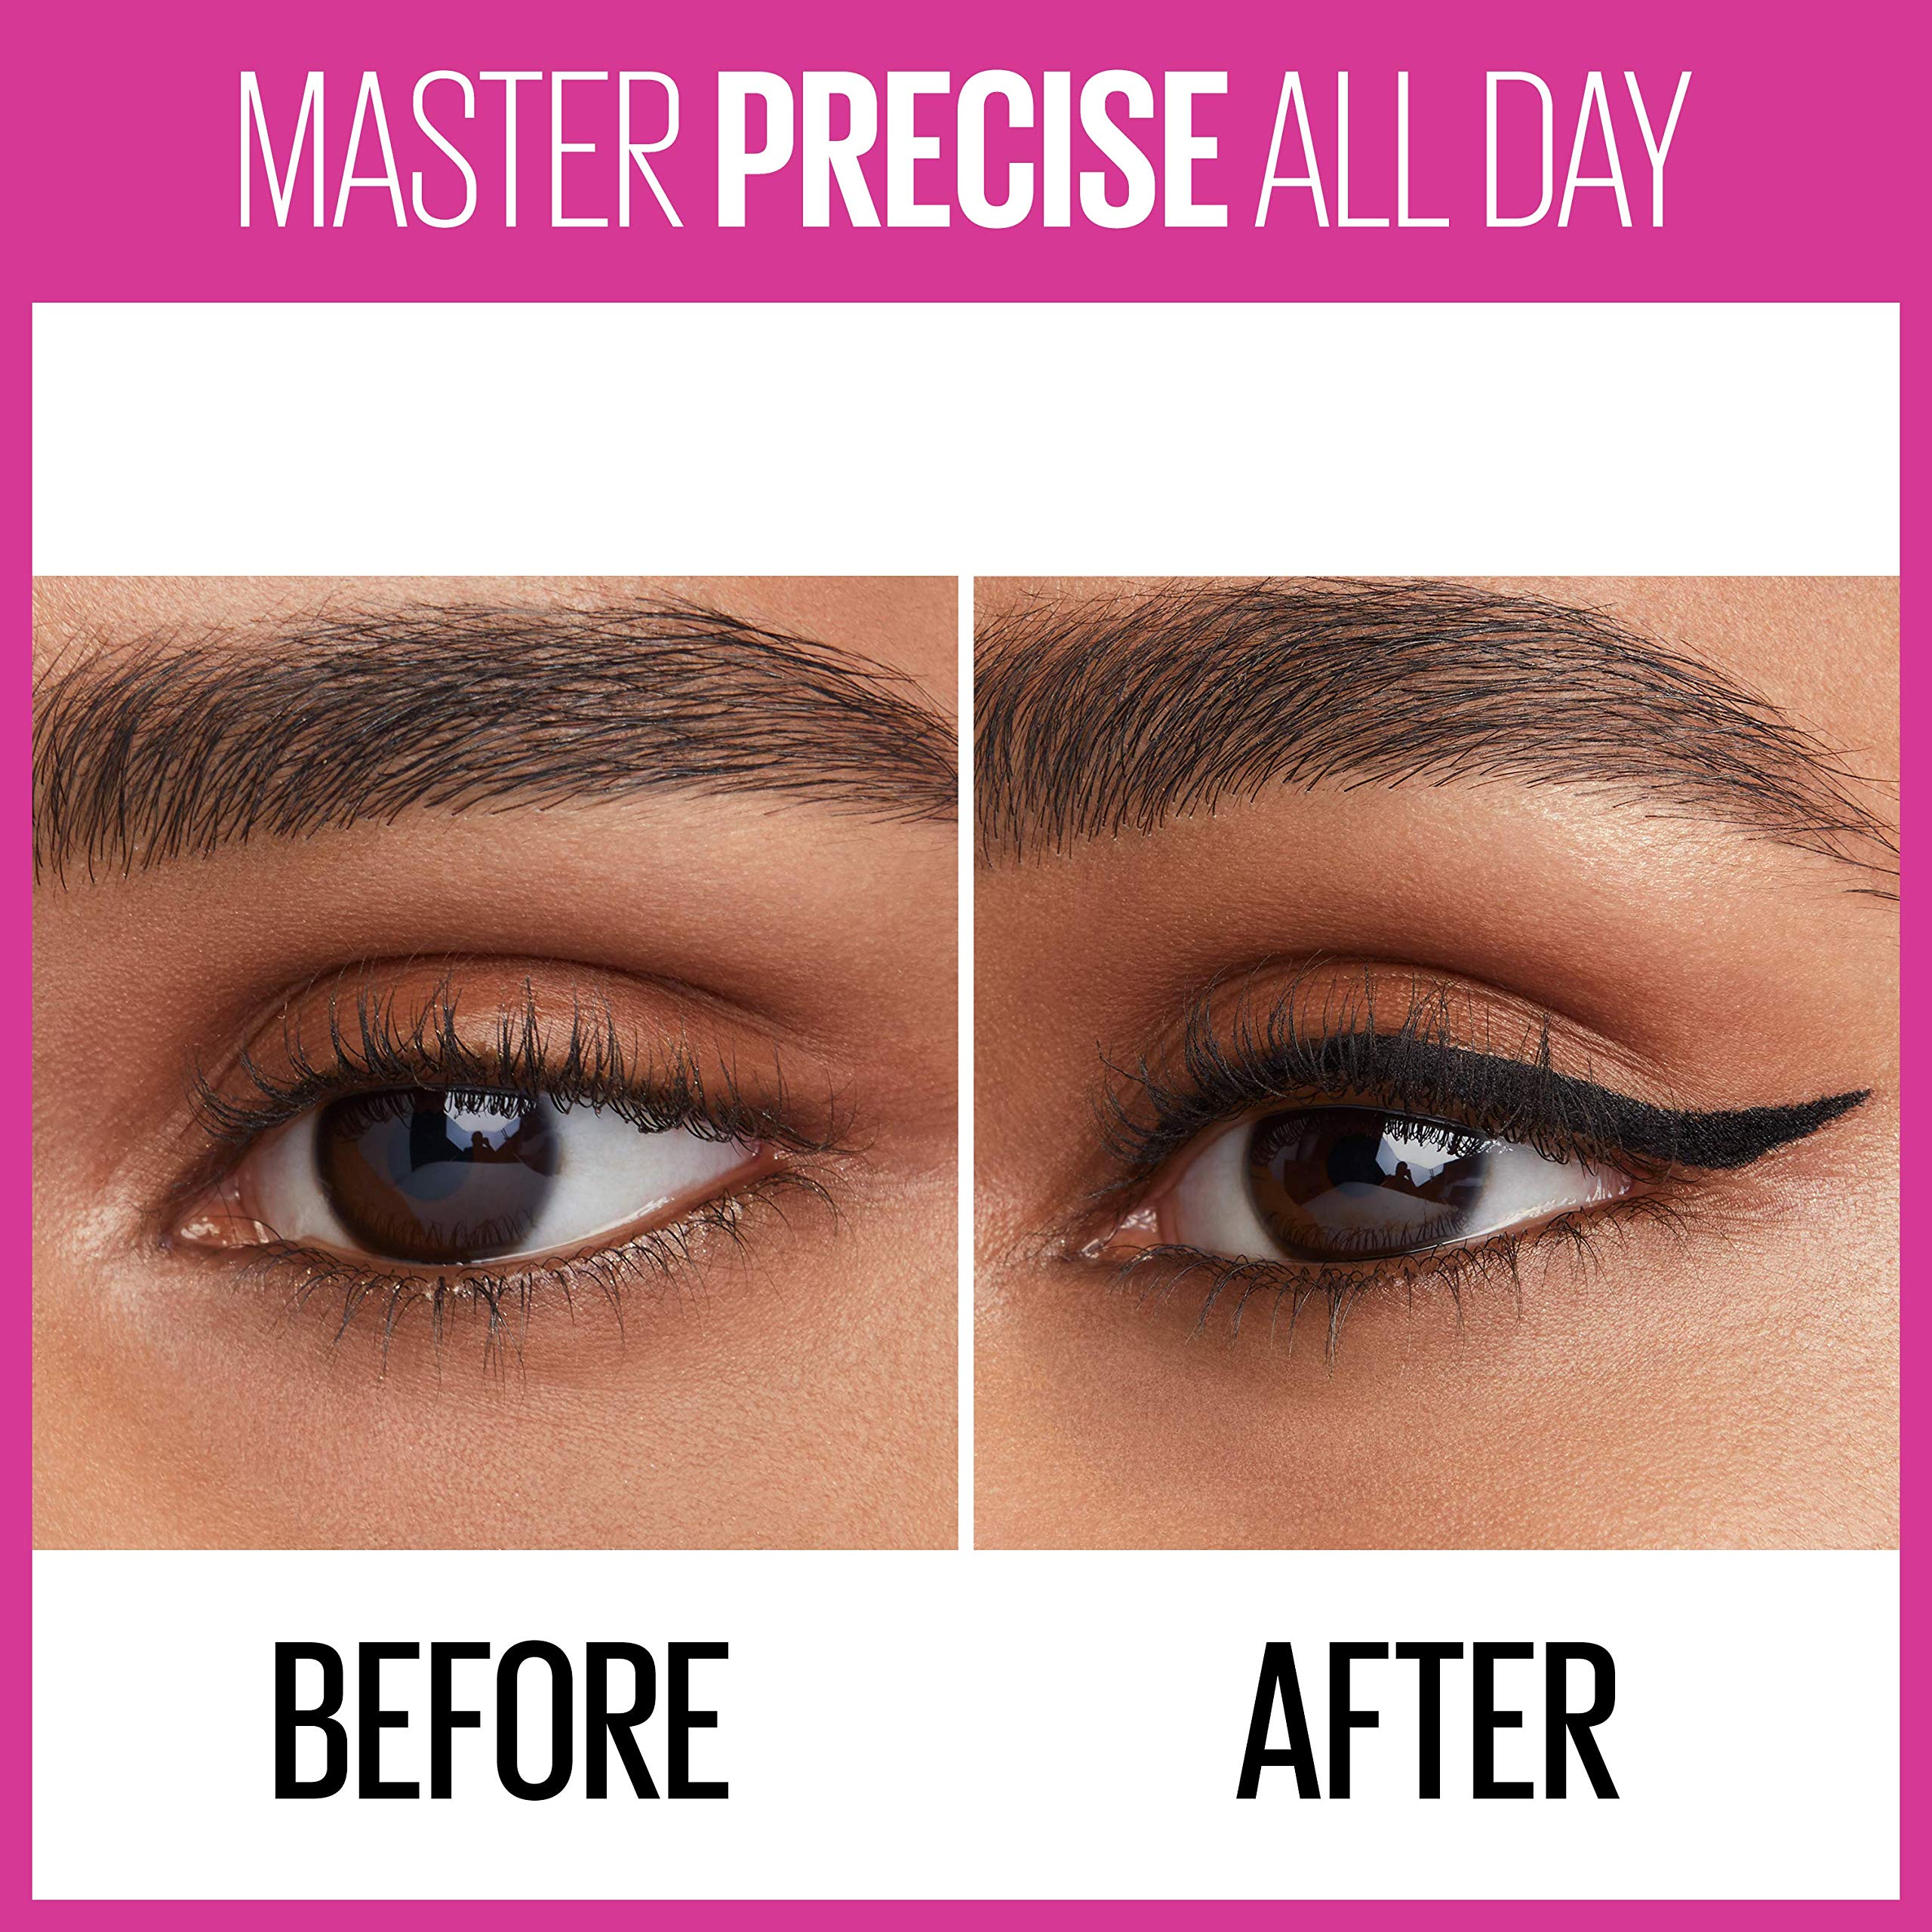 Maybelline New York Eyestudio Master Precise All Day Waterproof Liquid Eyeliner Makeup, Black, 1 Count